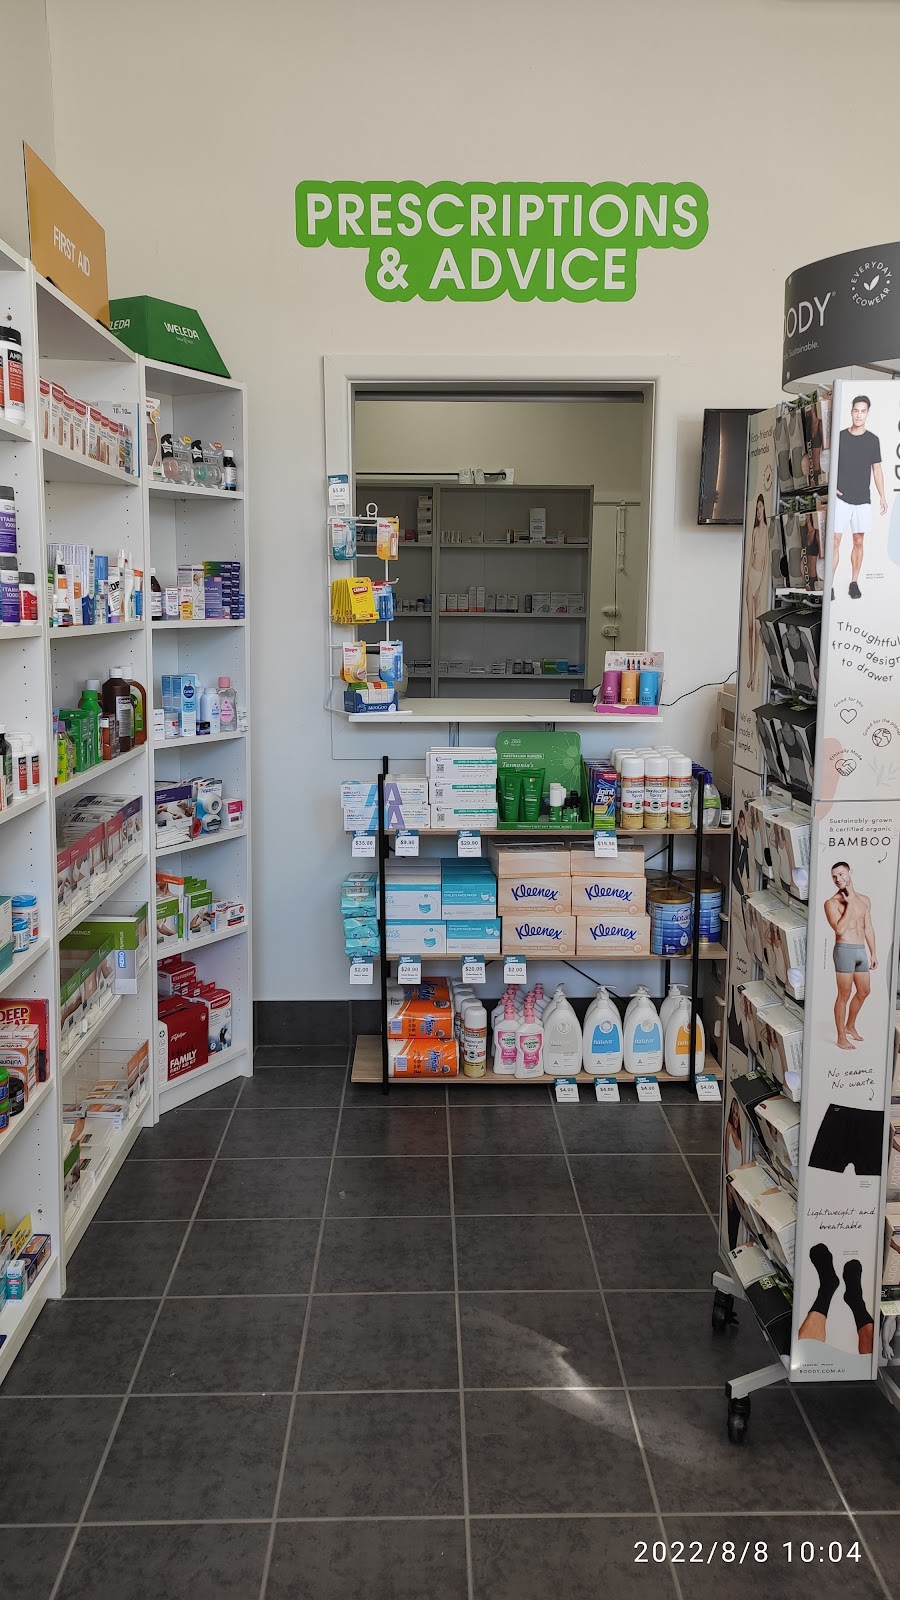 Glenrowan Pharmacy | 40 Gladstone St, Glenrowan VIC 3675, Australia | Phone: (03) 7021 1170